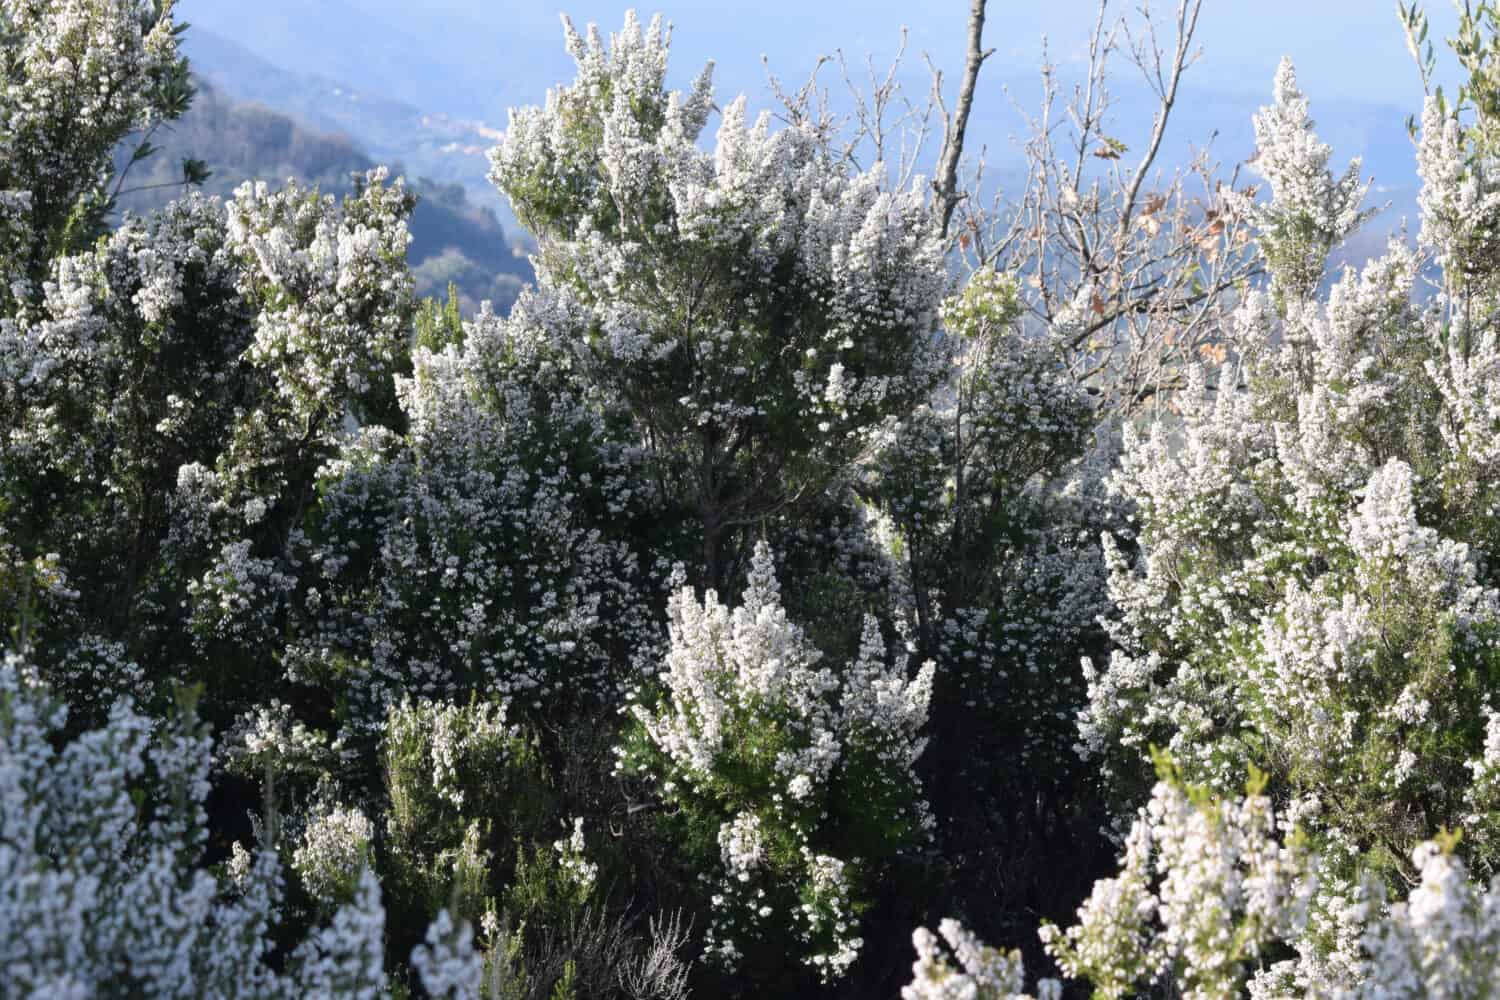 Tree heath (Erica arborea) with white flowers in Aspromonte, Calabria, Italy